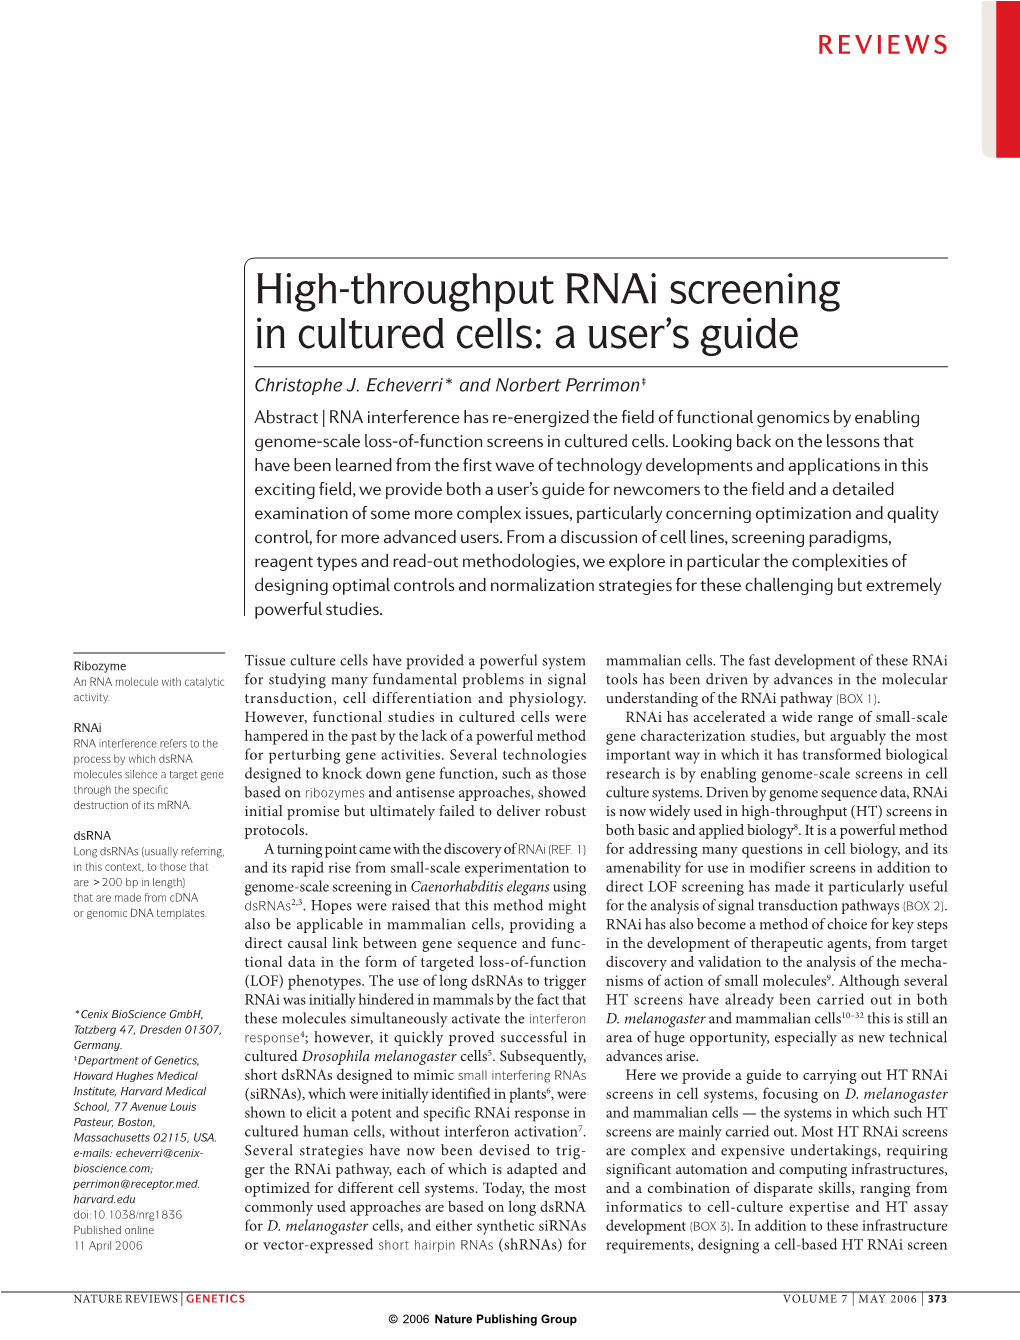 High-Throughput Rnai Screening in Cultured Cells: a User's Guide